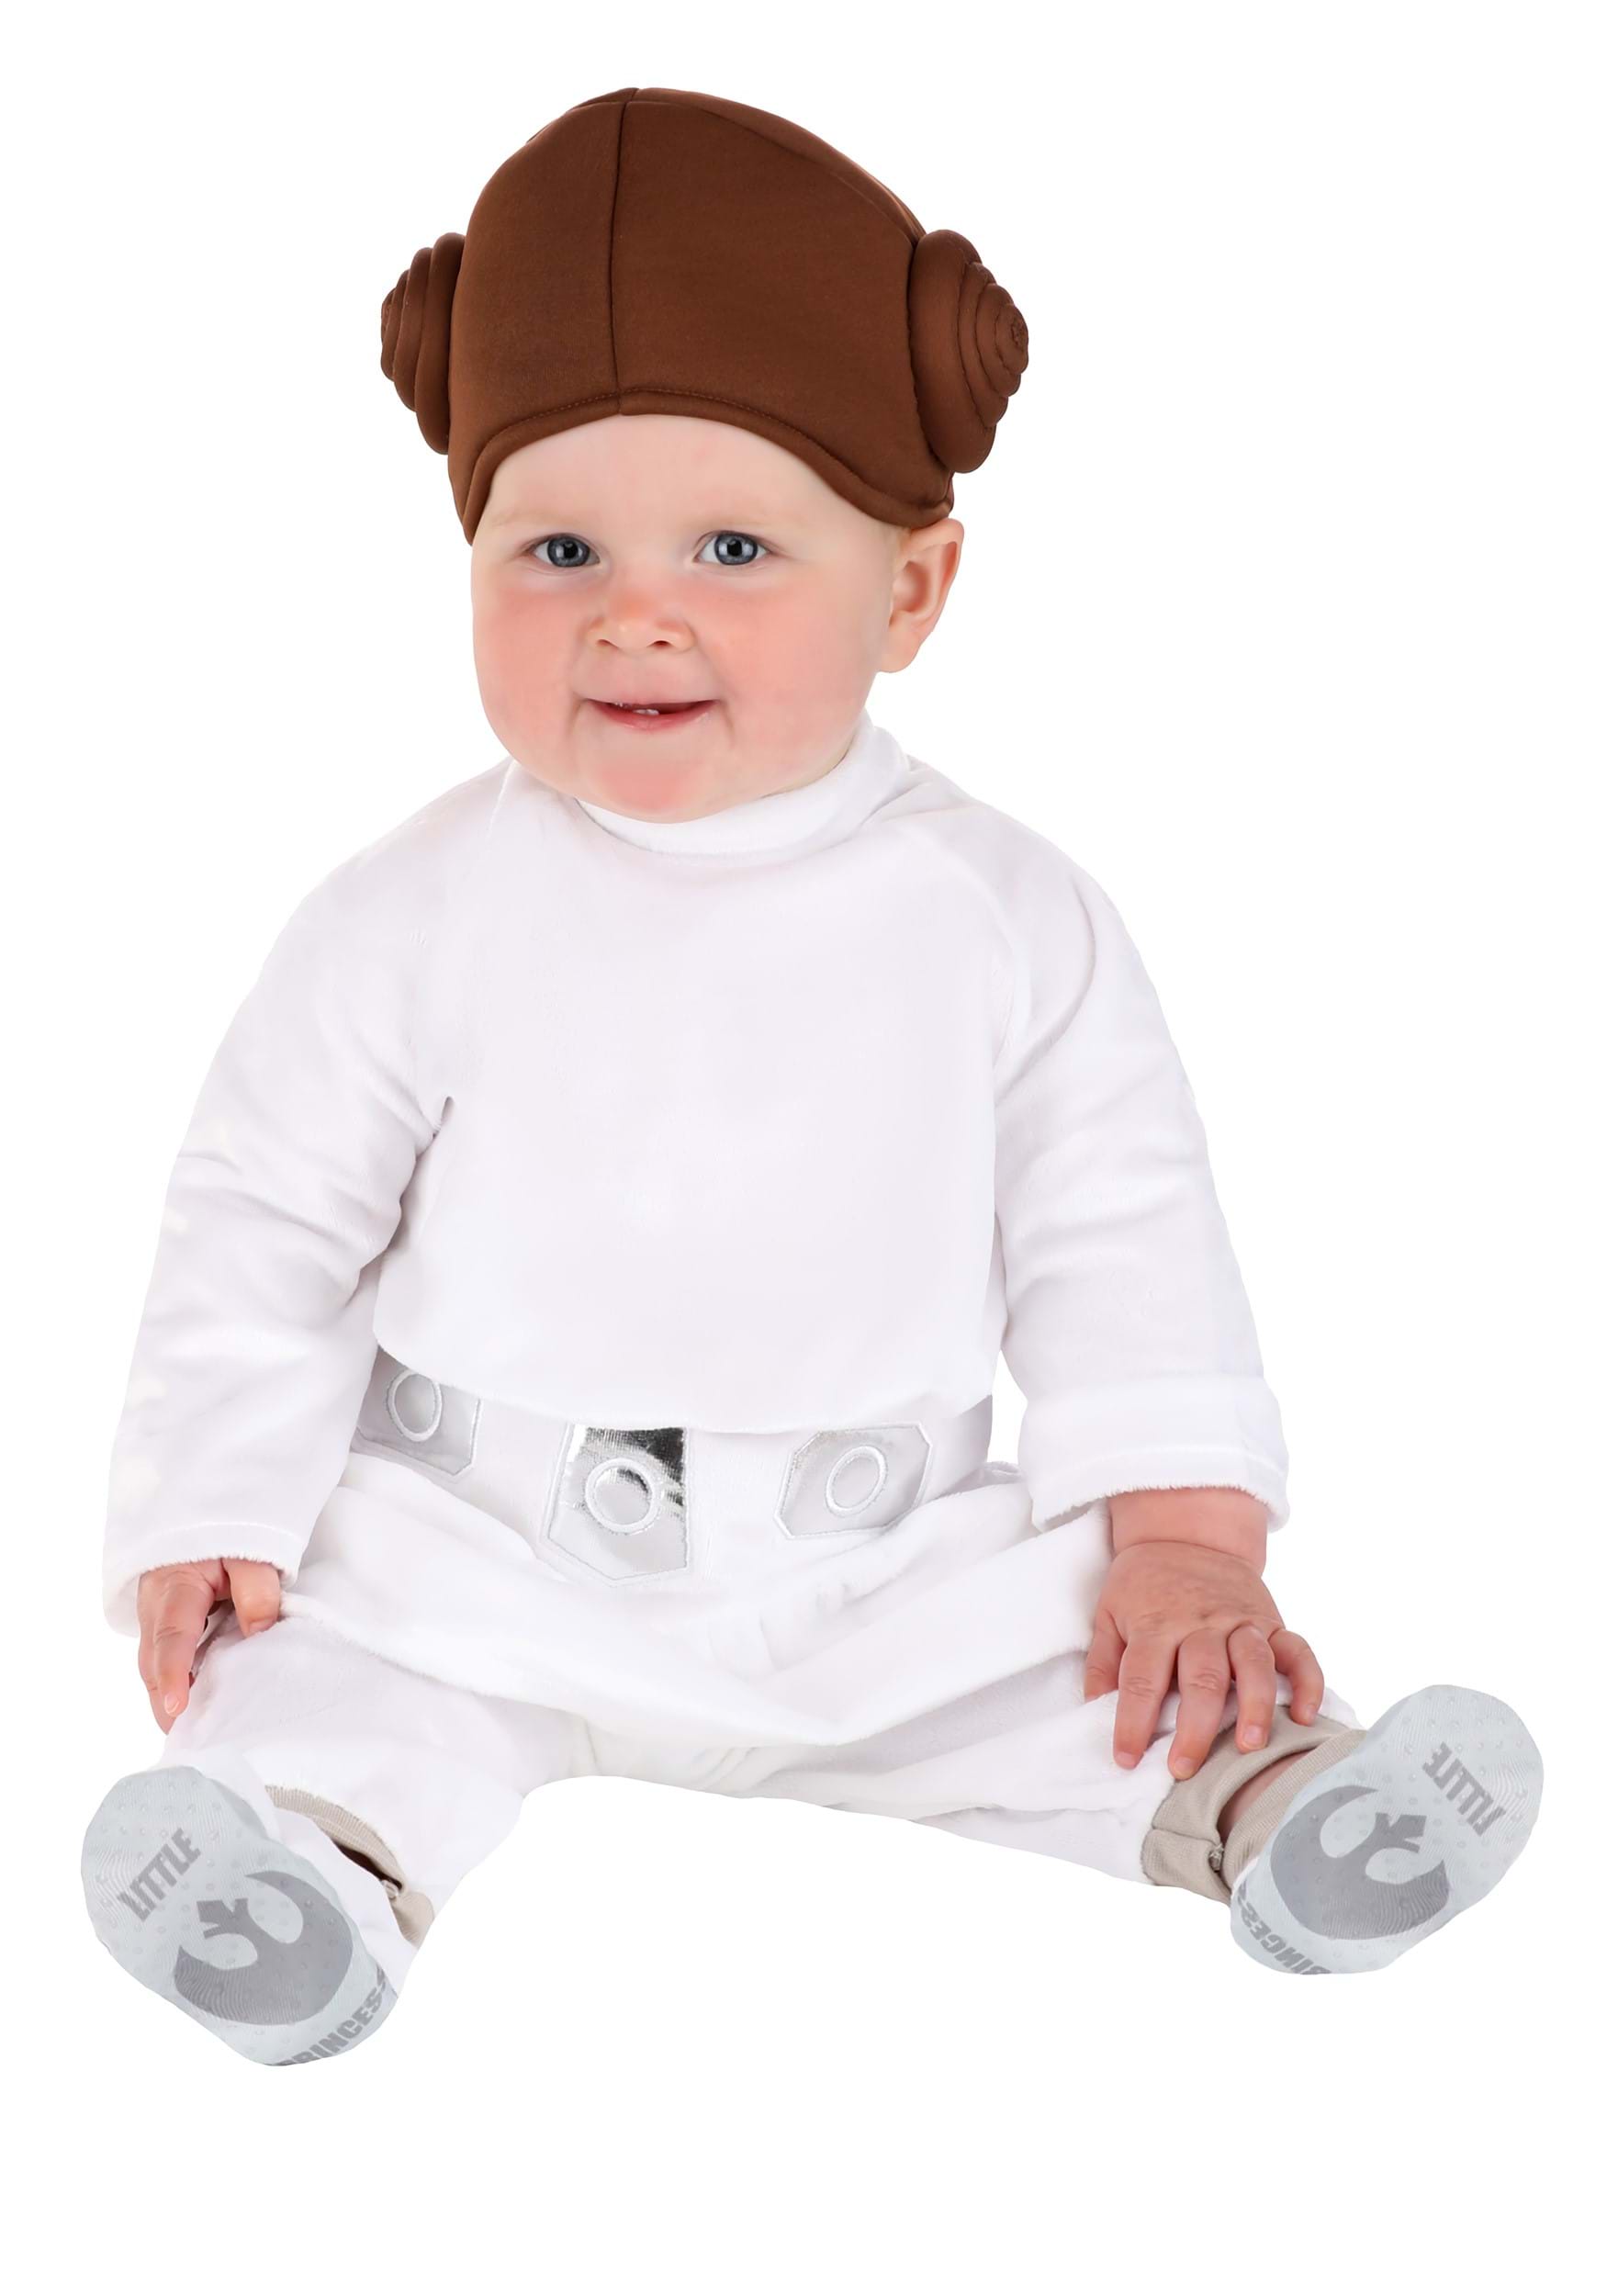 Photos - Fancy Dress Jazwares Princess Leia Costume for Infants Brown/Gray/White 